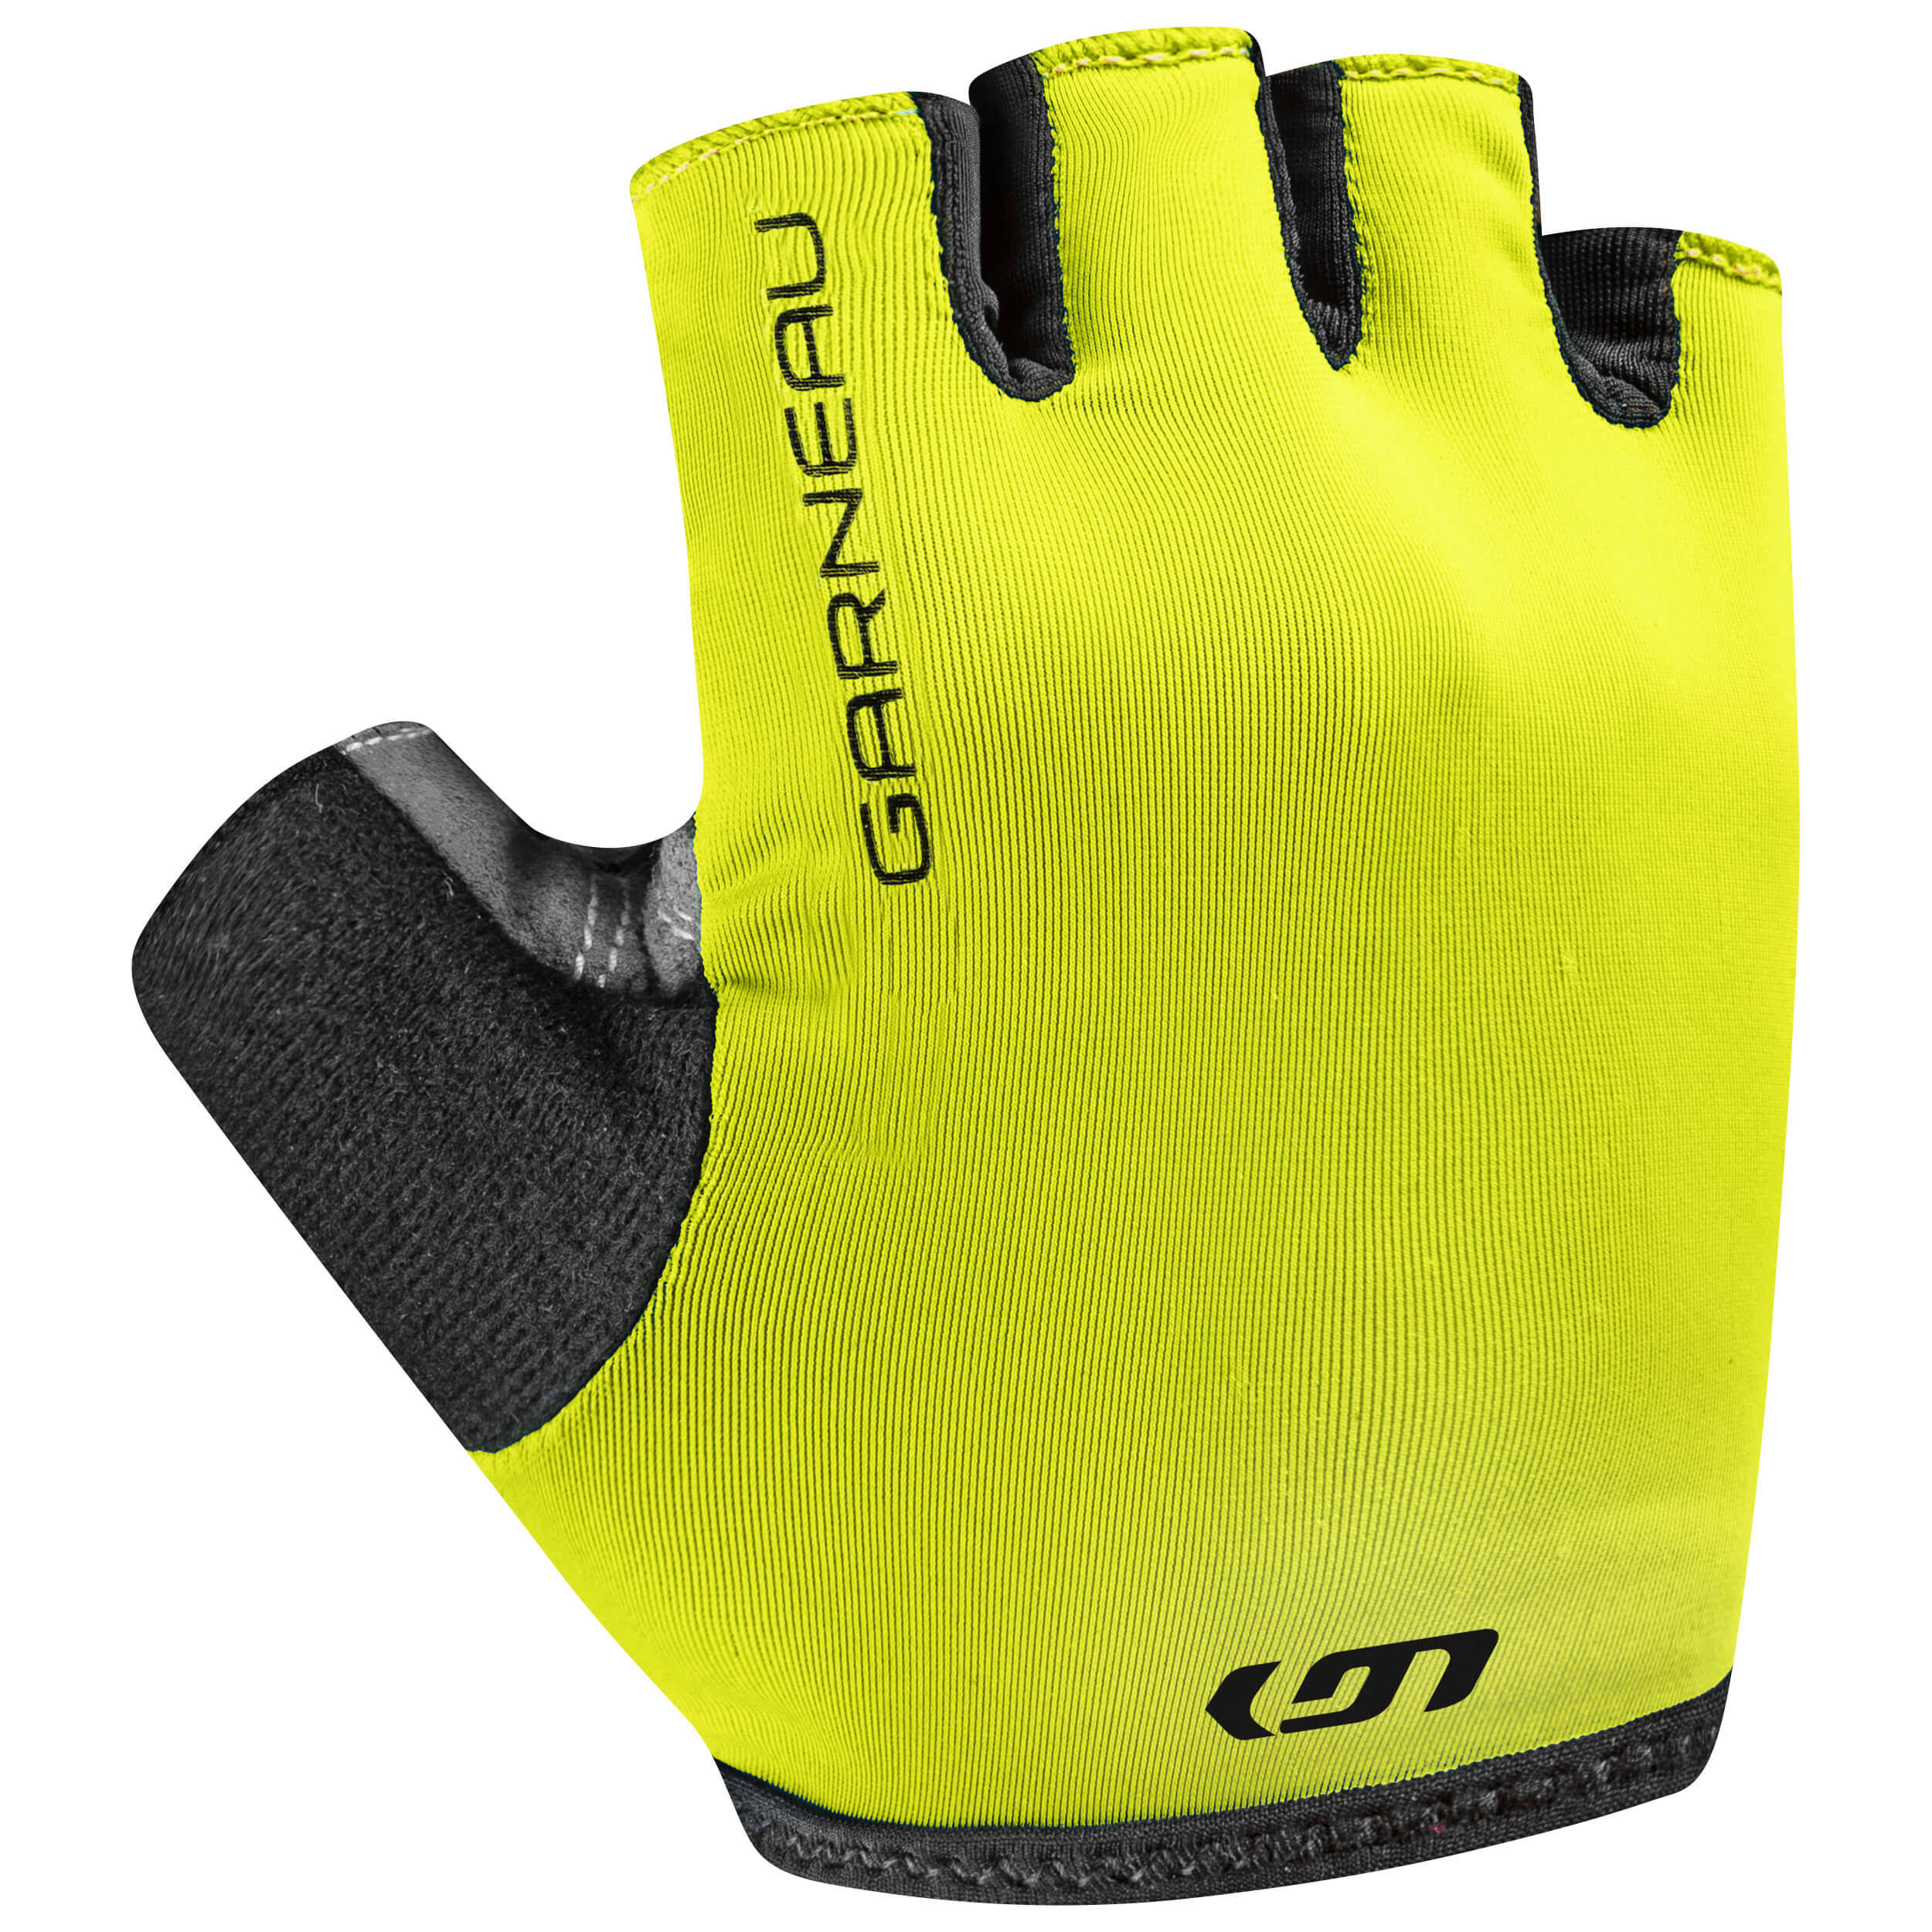 GARNEAU Calory junior cycling gloves